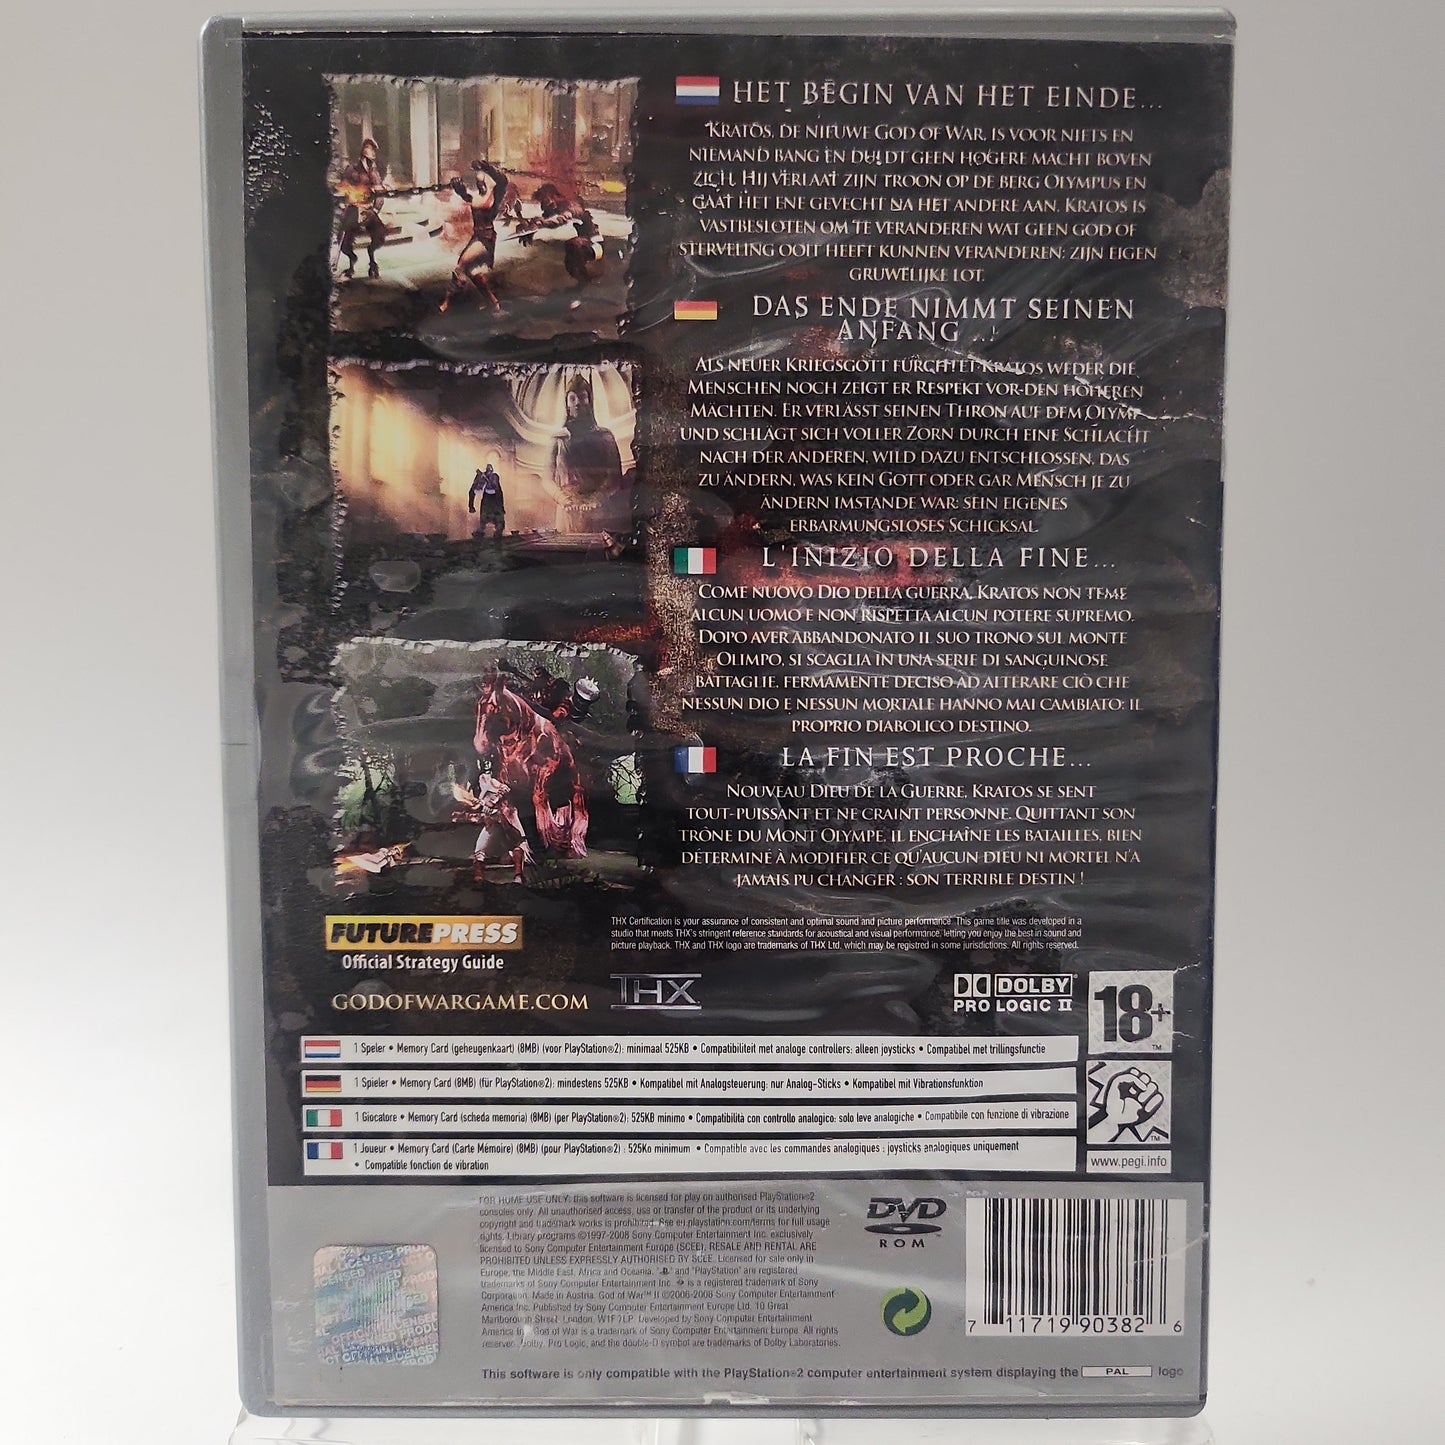 God of War II Platinum Edition Playstation 2